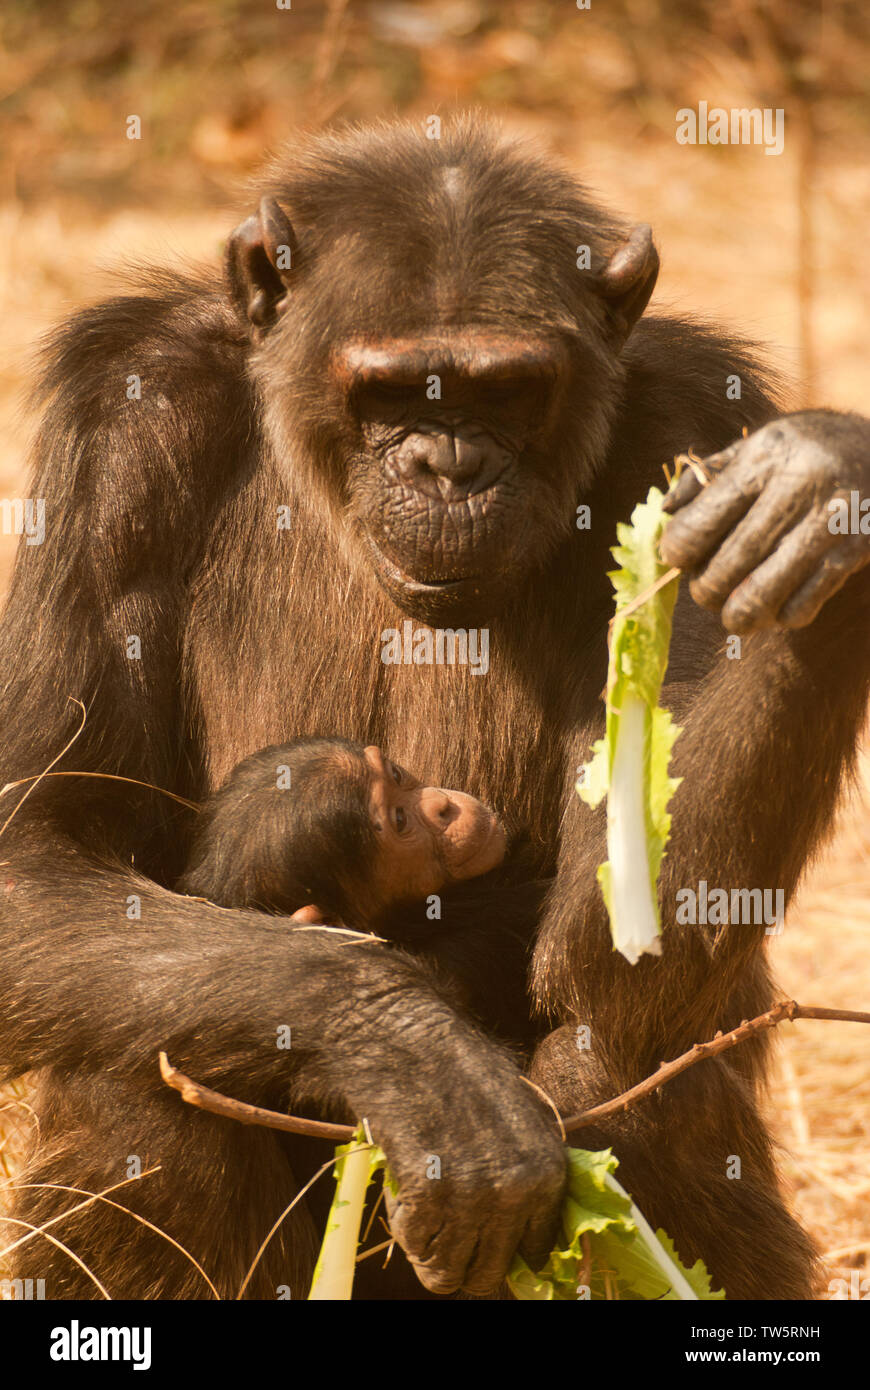 chimpanzee feeding baby with leaf Stock Photo